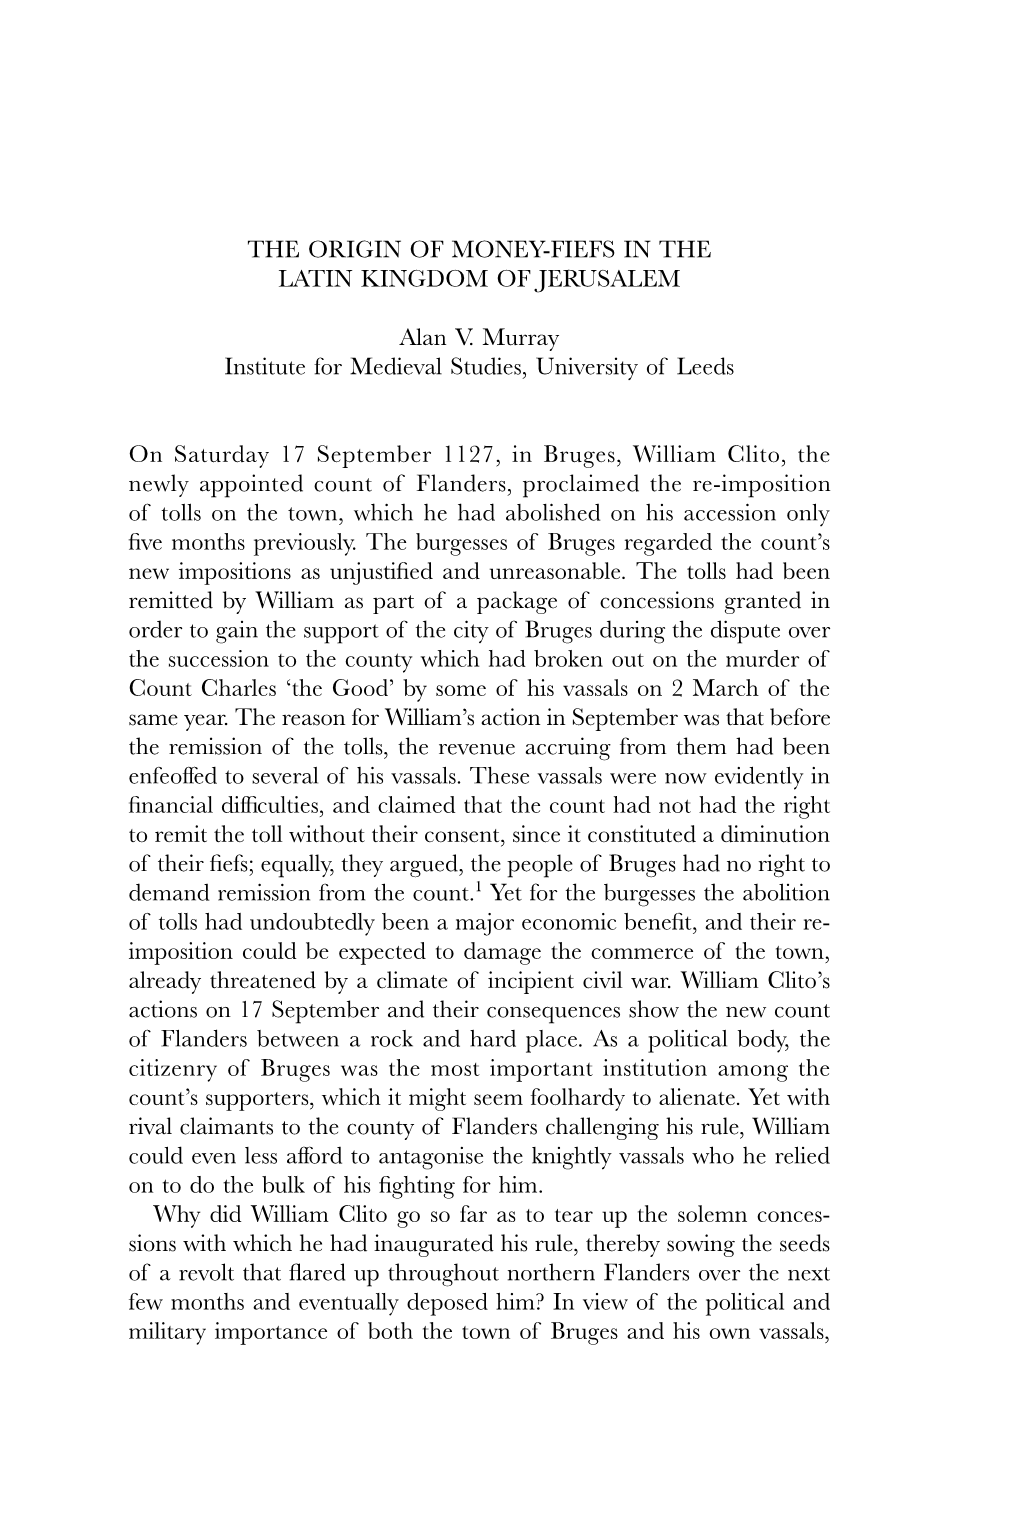 The Origin of Money-Fiefs in the Latin Kingdom of Jerusalem